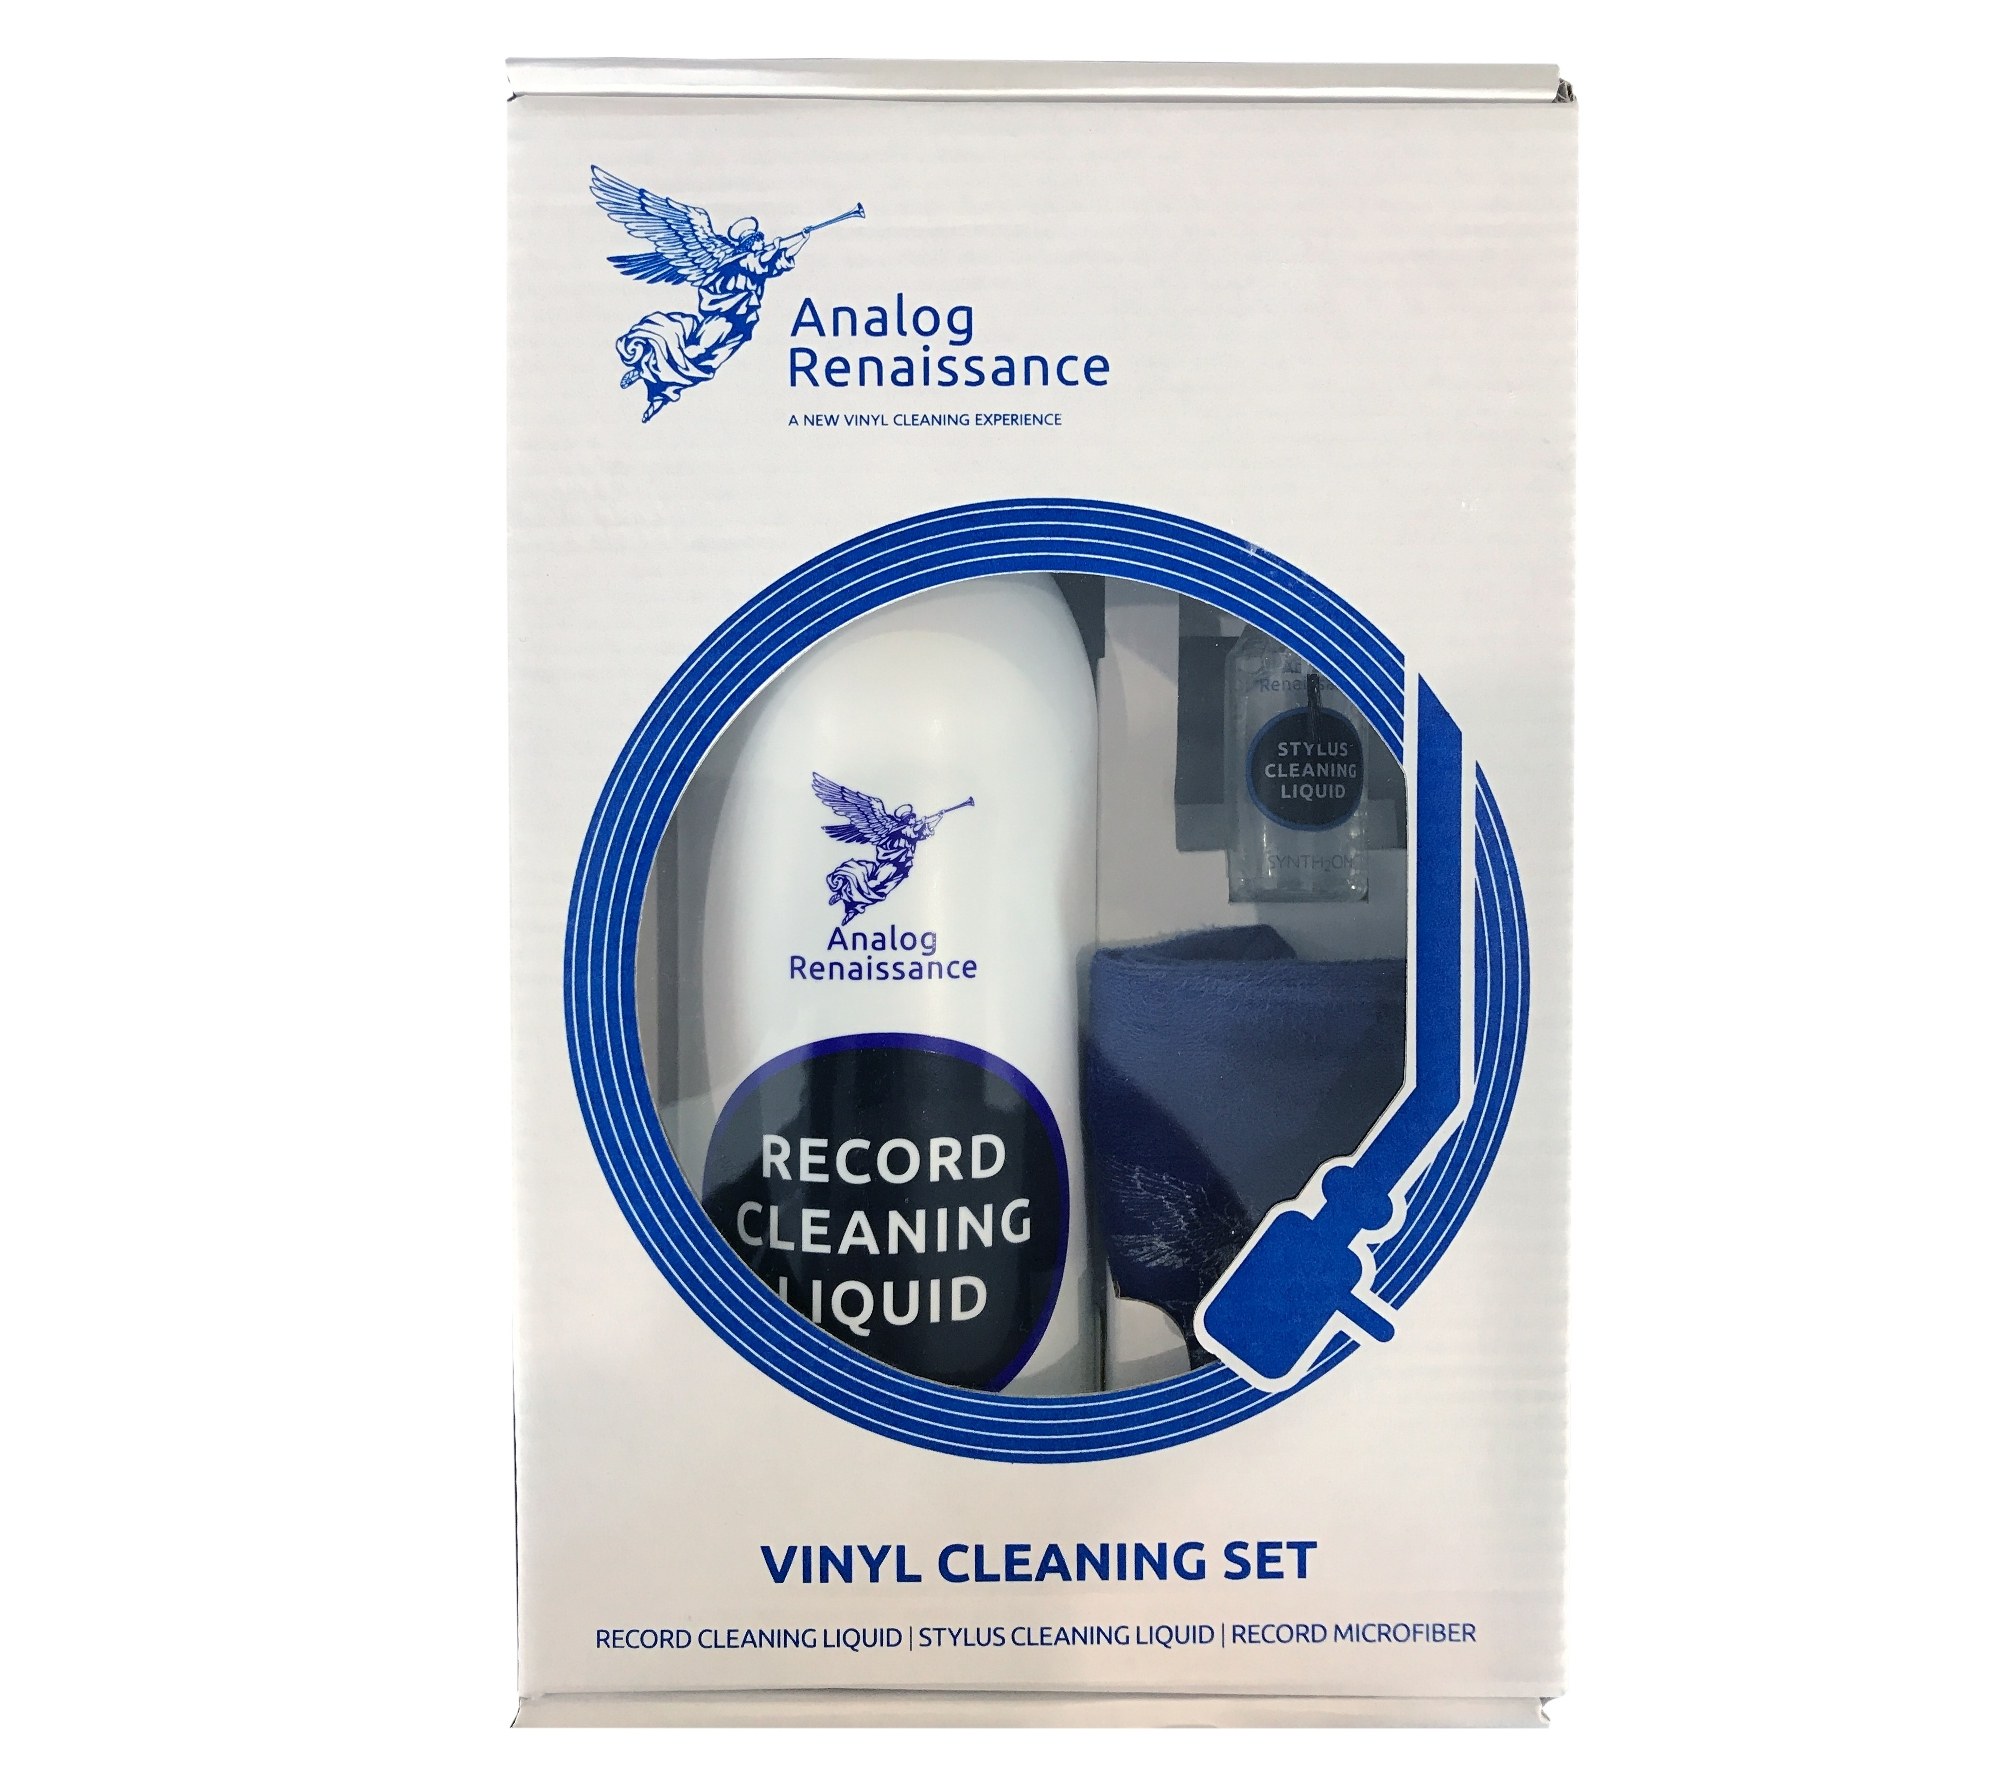 Analog Renaissance Vinyl Cleaning Set